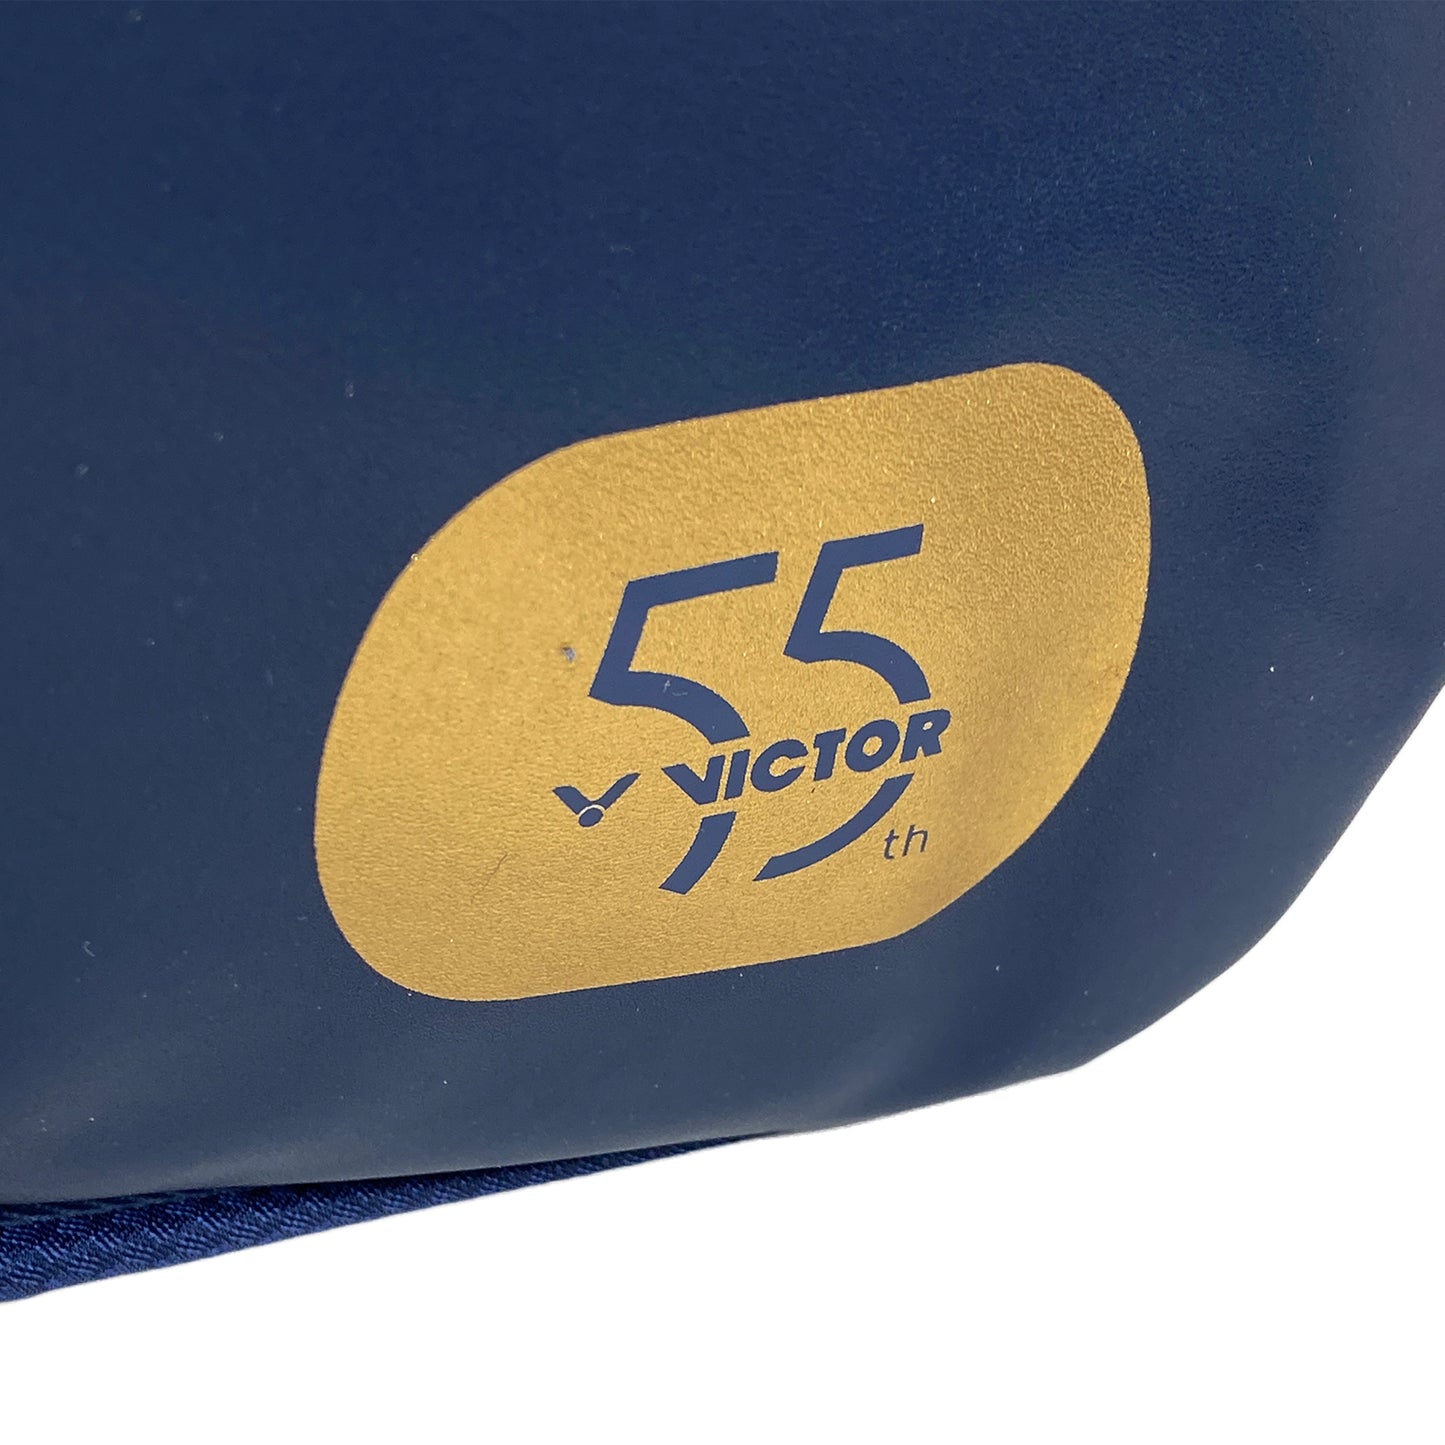 Victor Sac Rectangulaire 55e anniversaire - Bleu médiéval (BR9612-55-B)